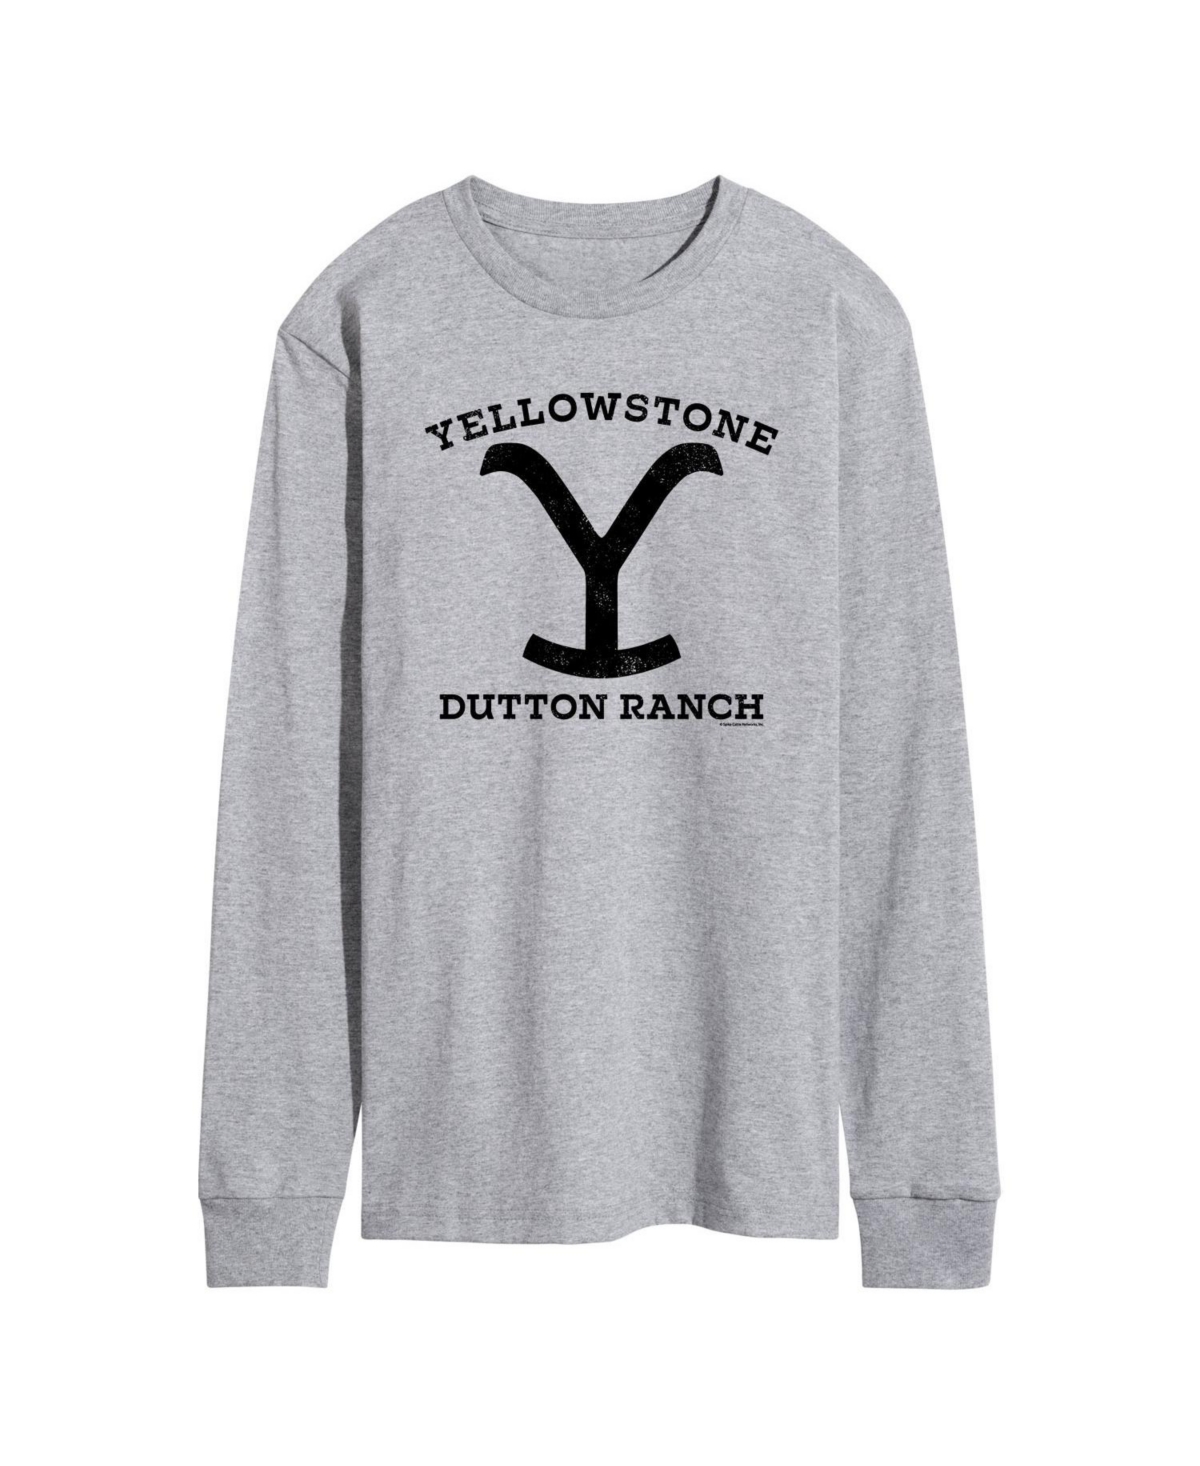 Airwaves Men's Yellowstone Dutton Ranch Y Long Sleeve T-shirt